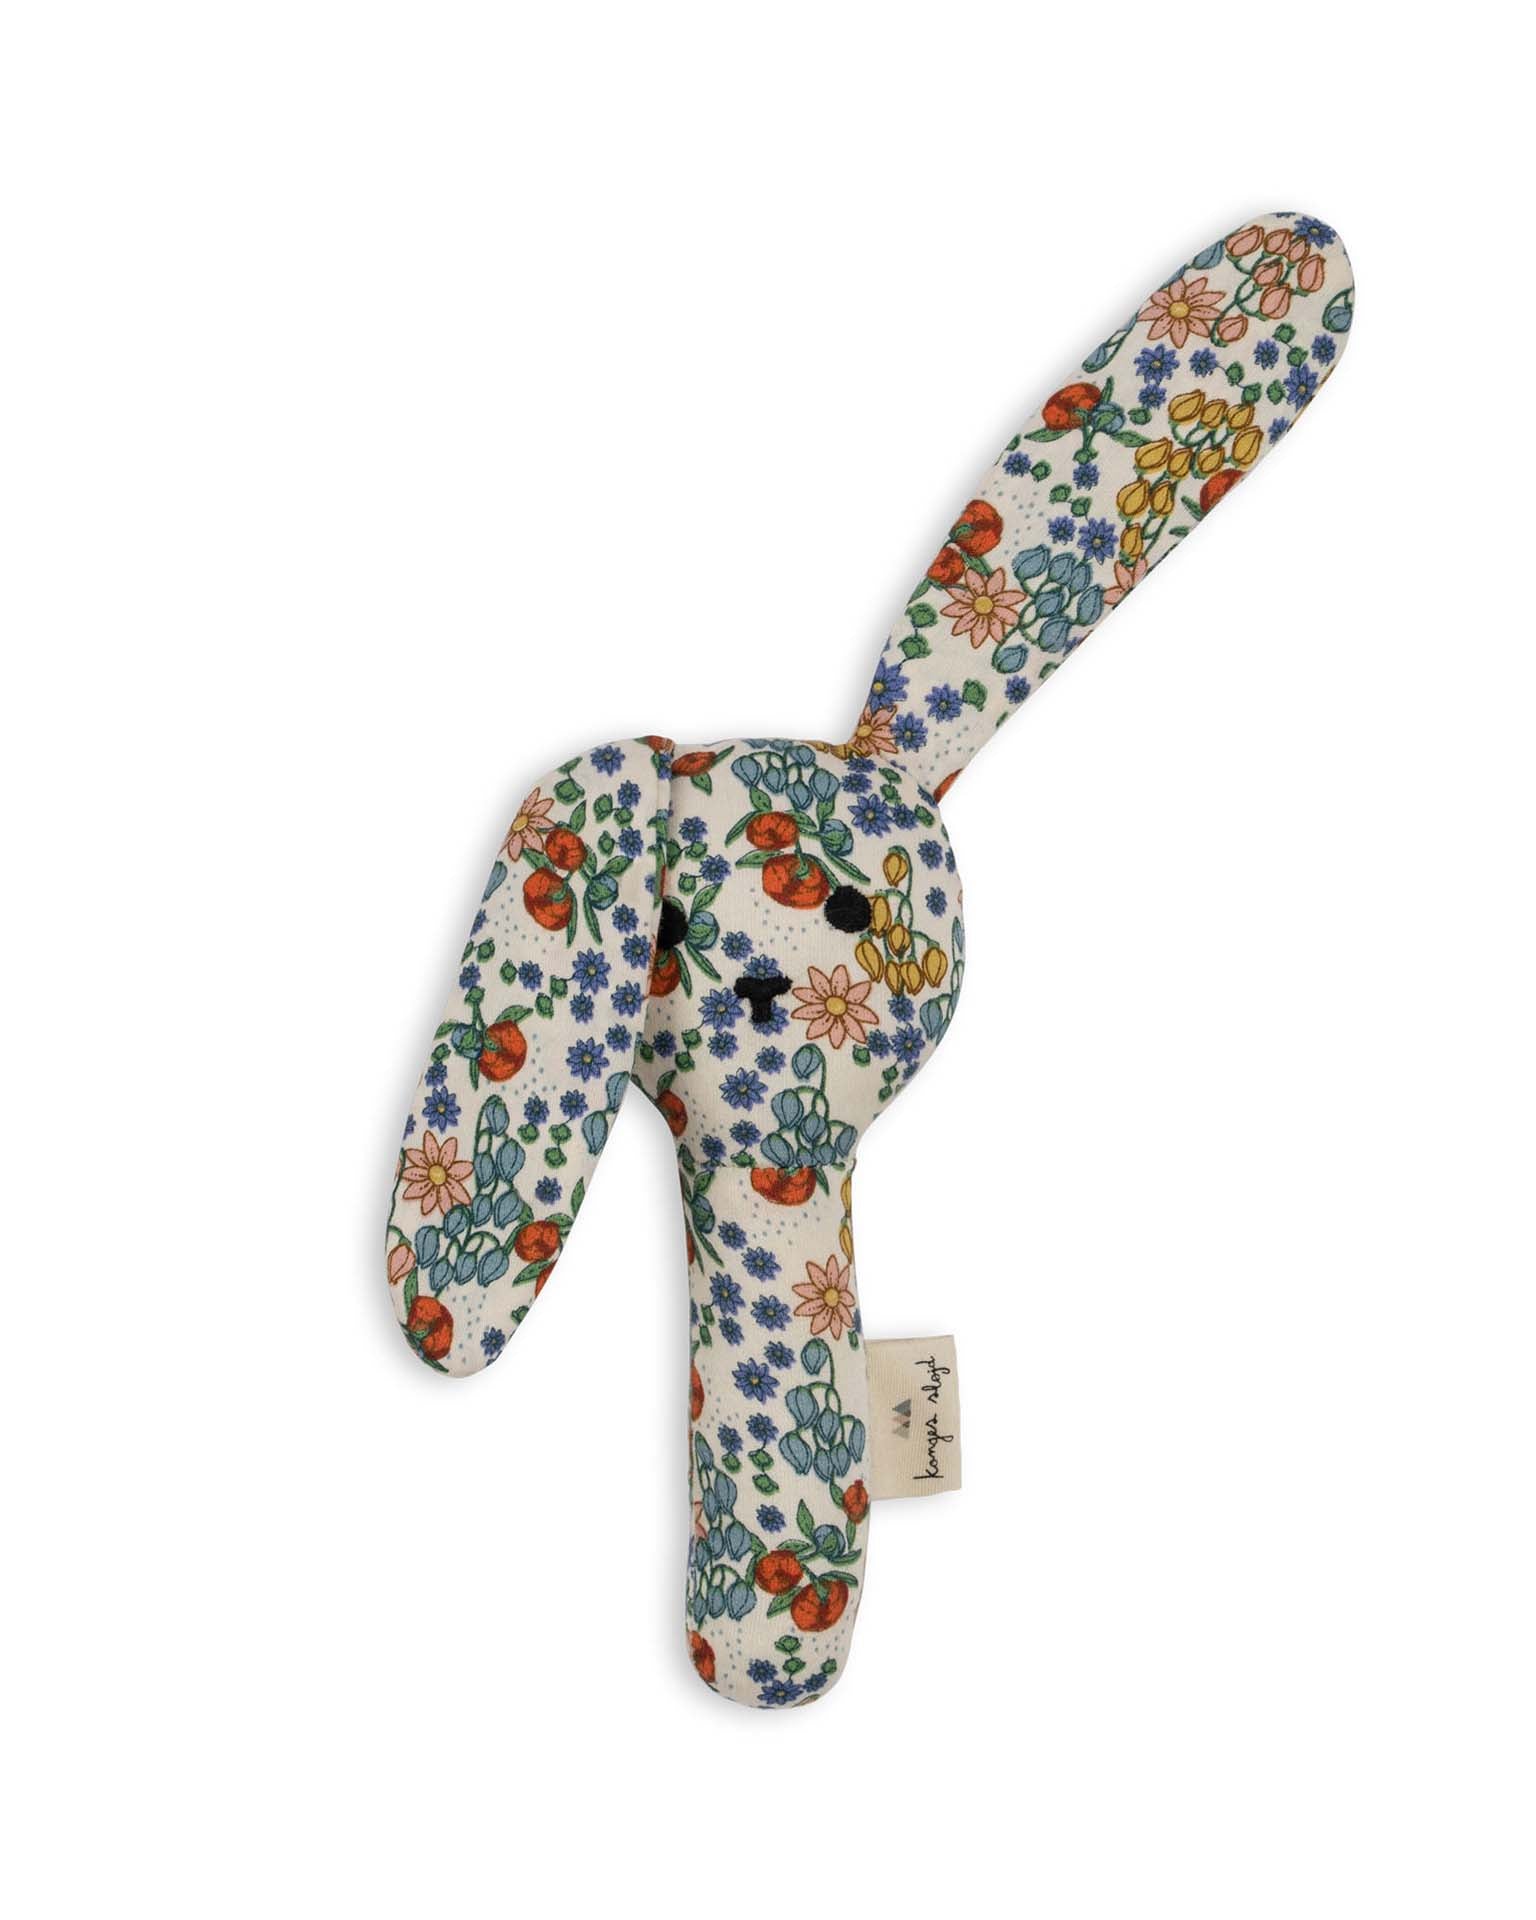 Little konges sløjd accessories bunny hand rattle in bibi fleur